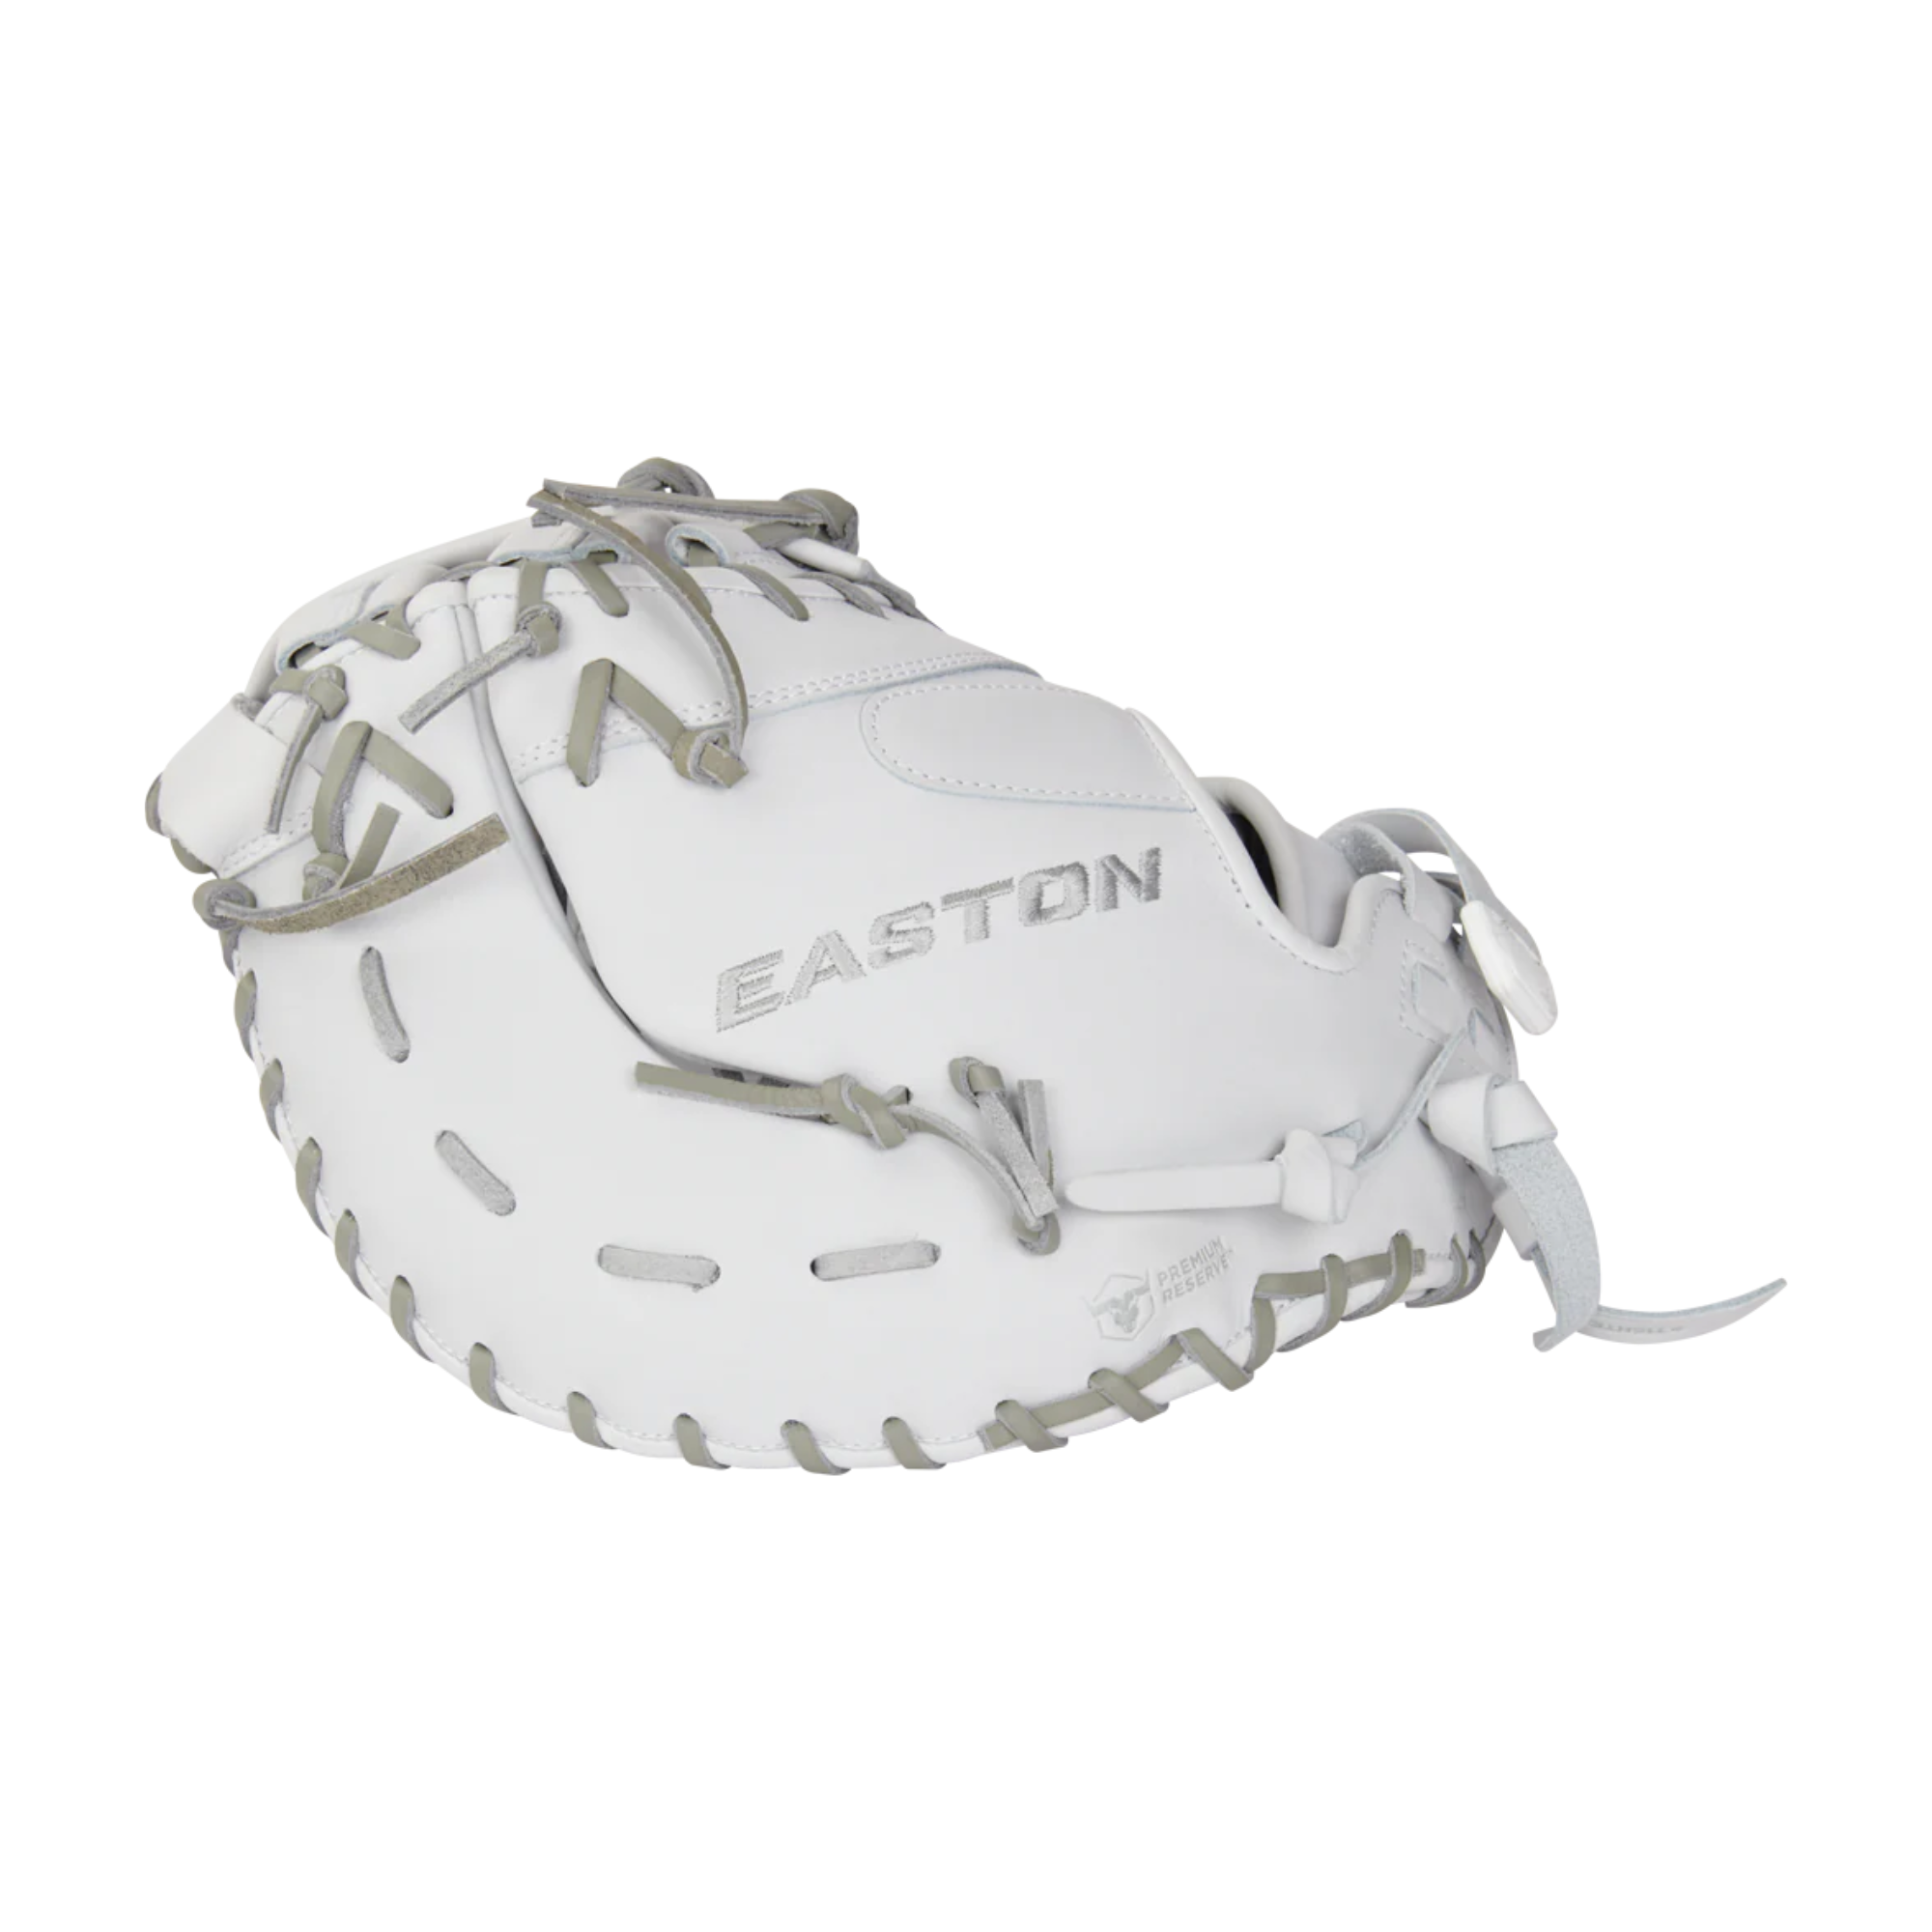 Easton Pro Collection Series First Base Mitt Softball Glove 13" LHT